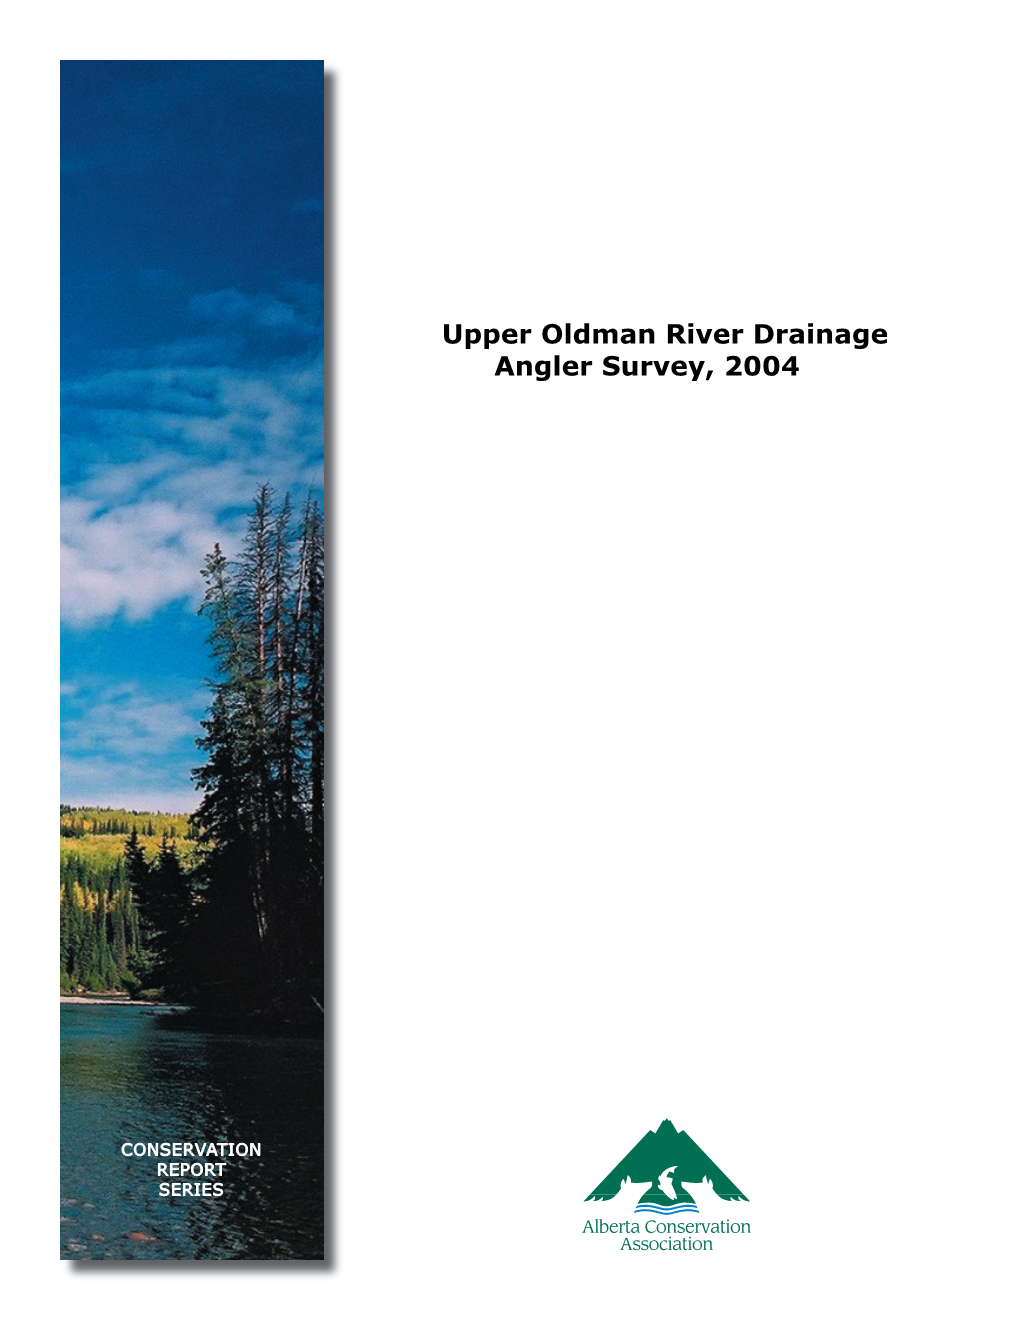 Upper Oldman River Drainage Angler Survey, 2004